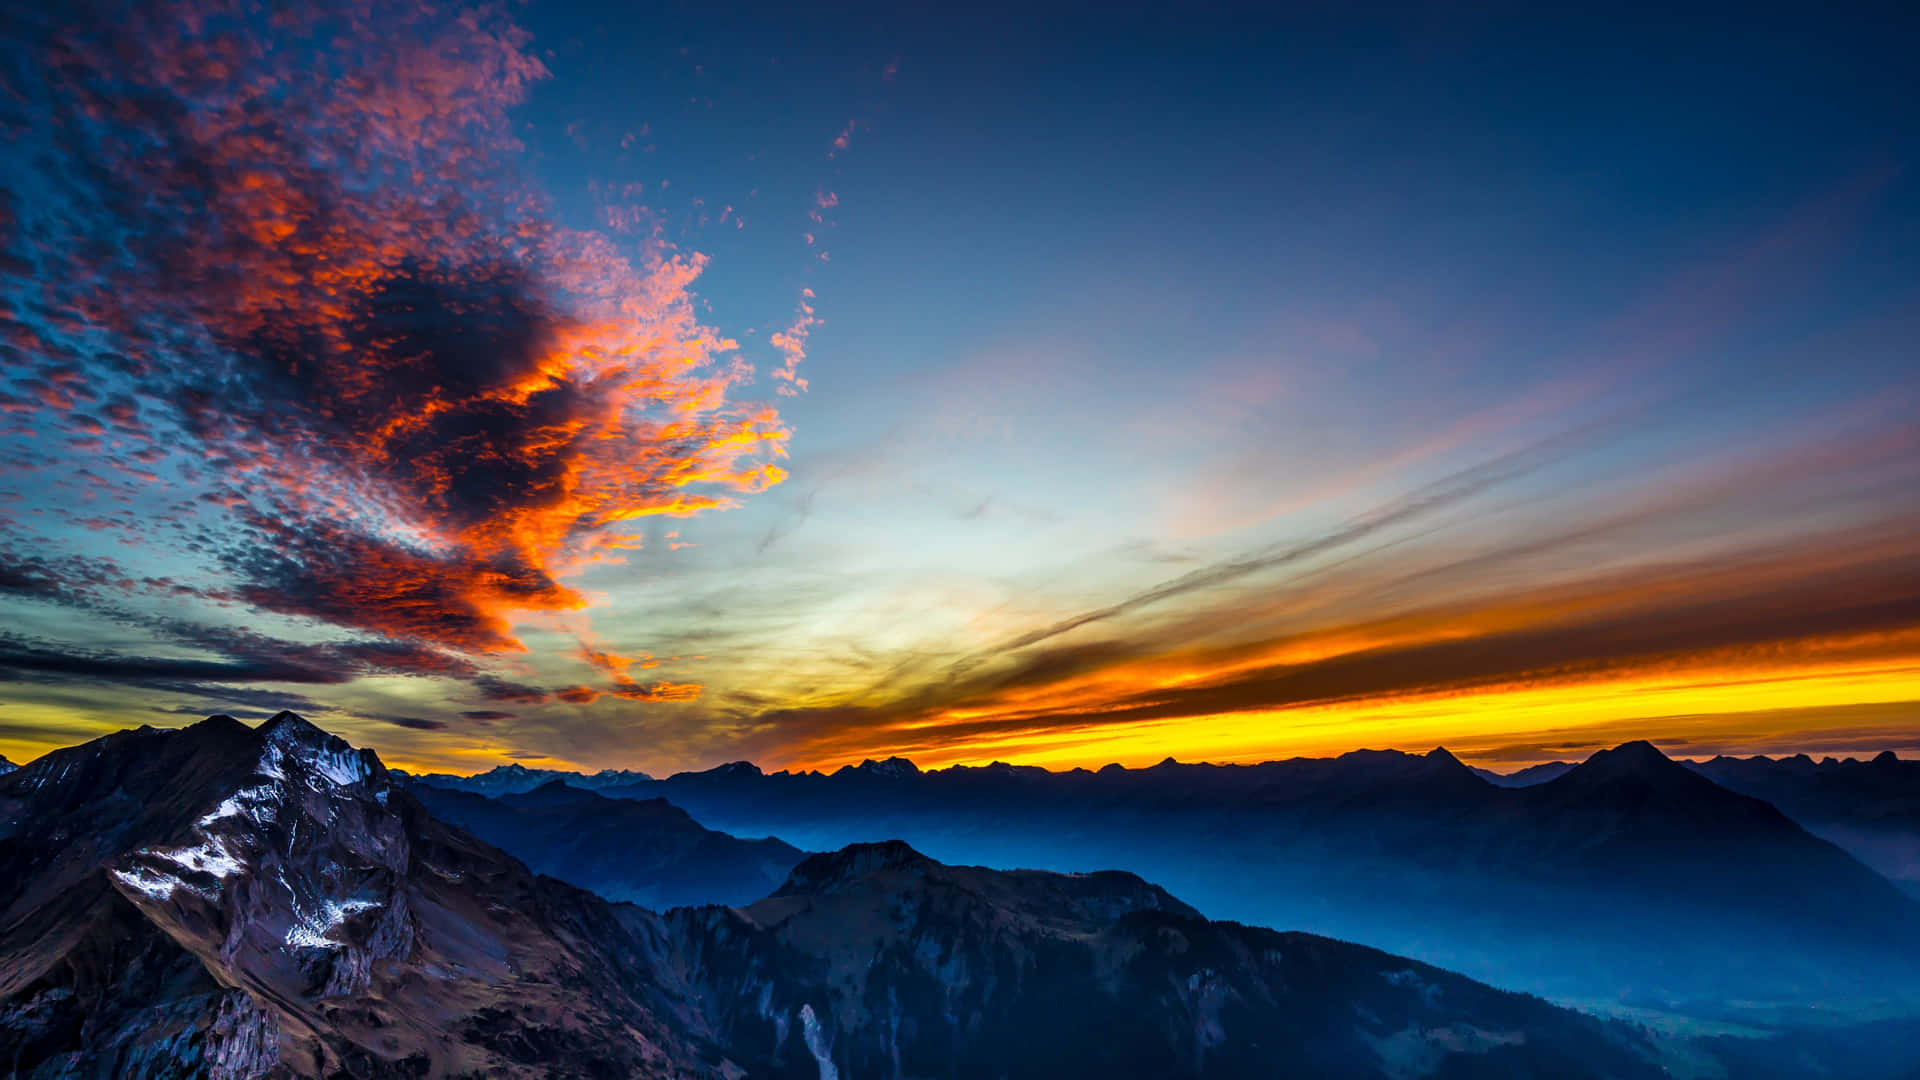 Surreal Mountains Sunset In Switzerland Wallpaper